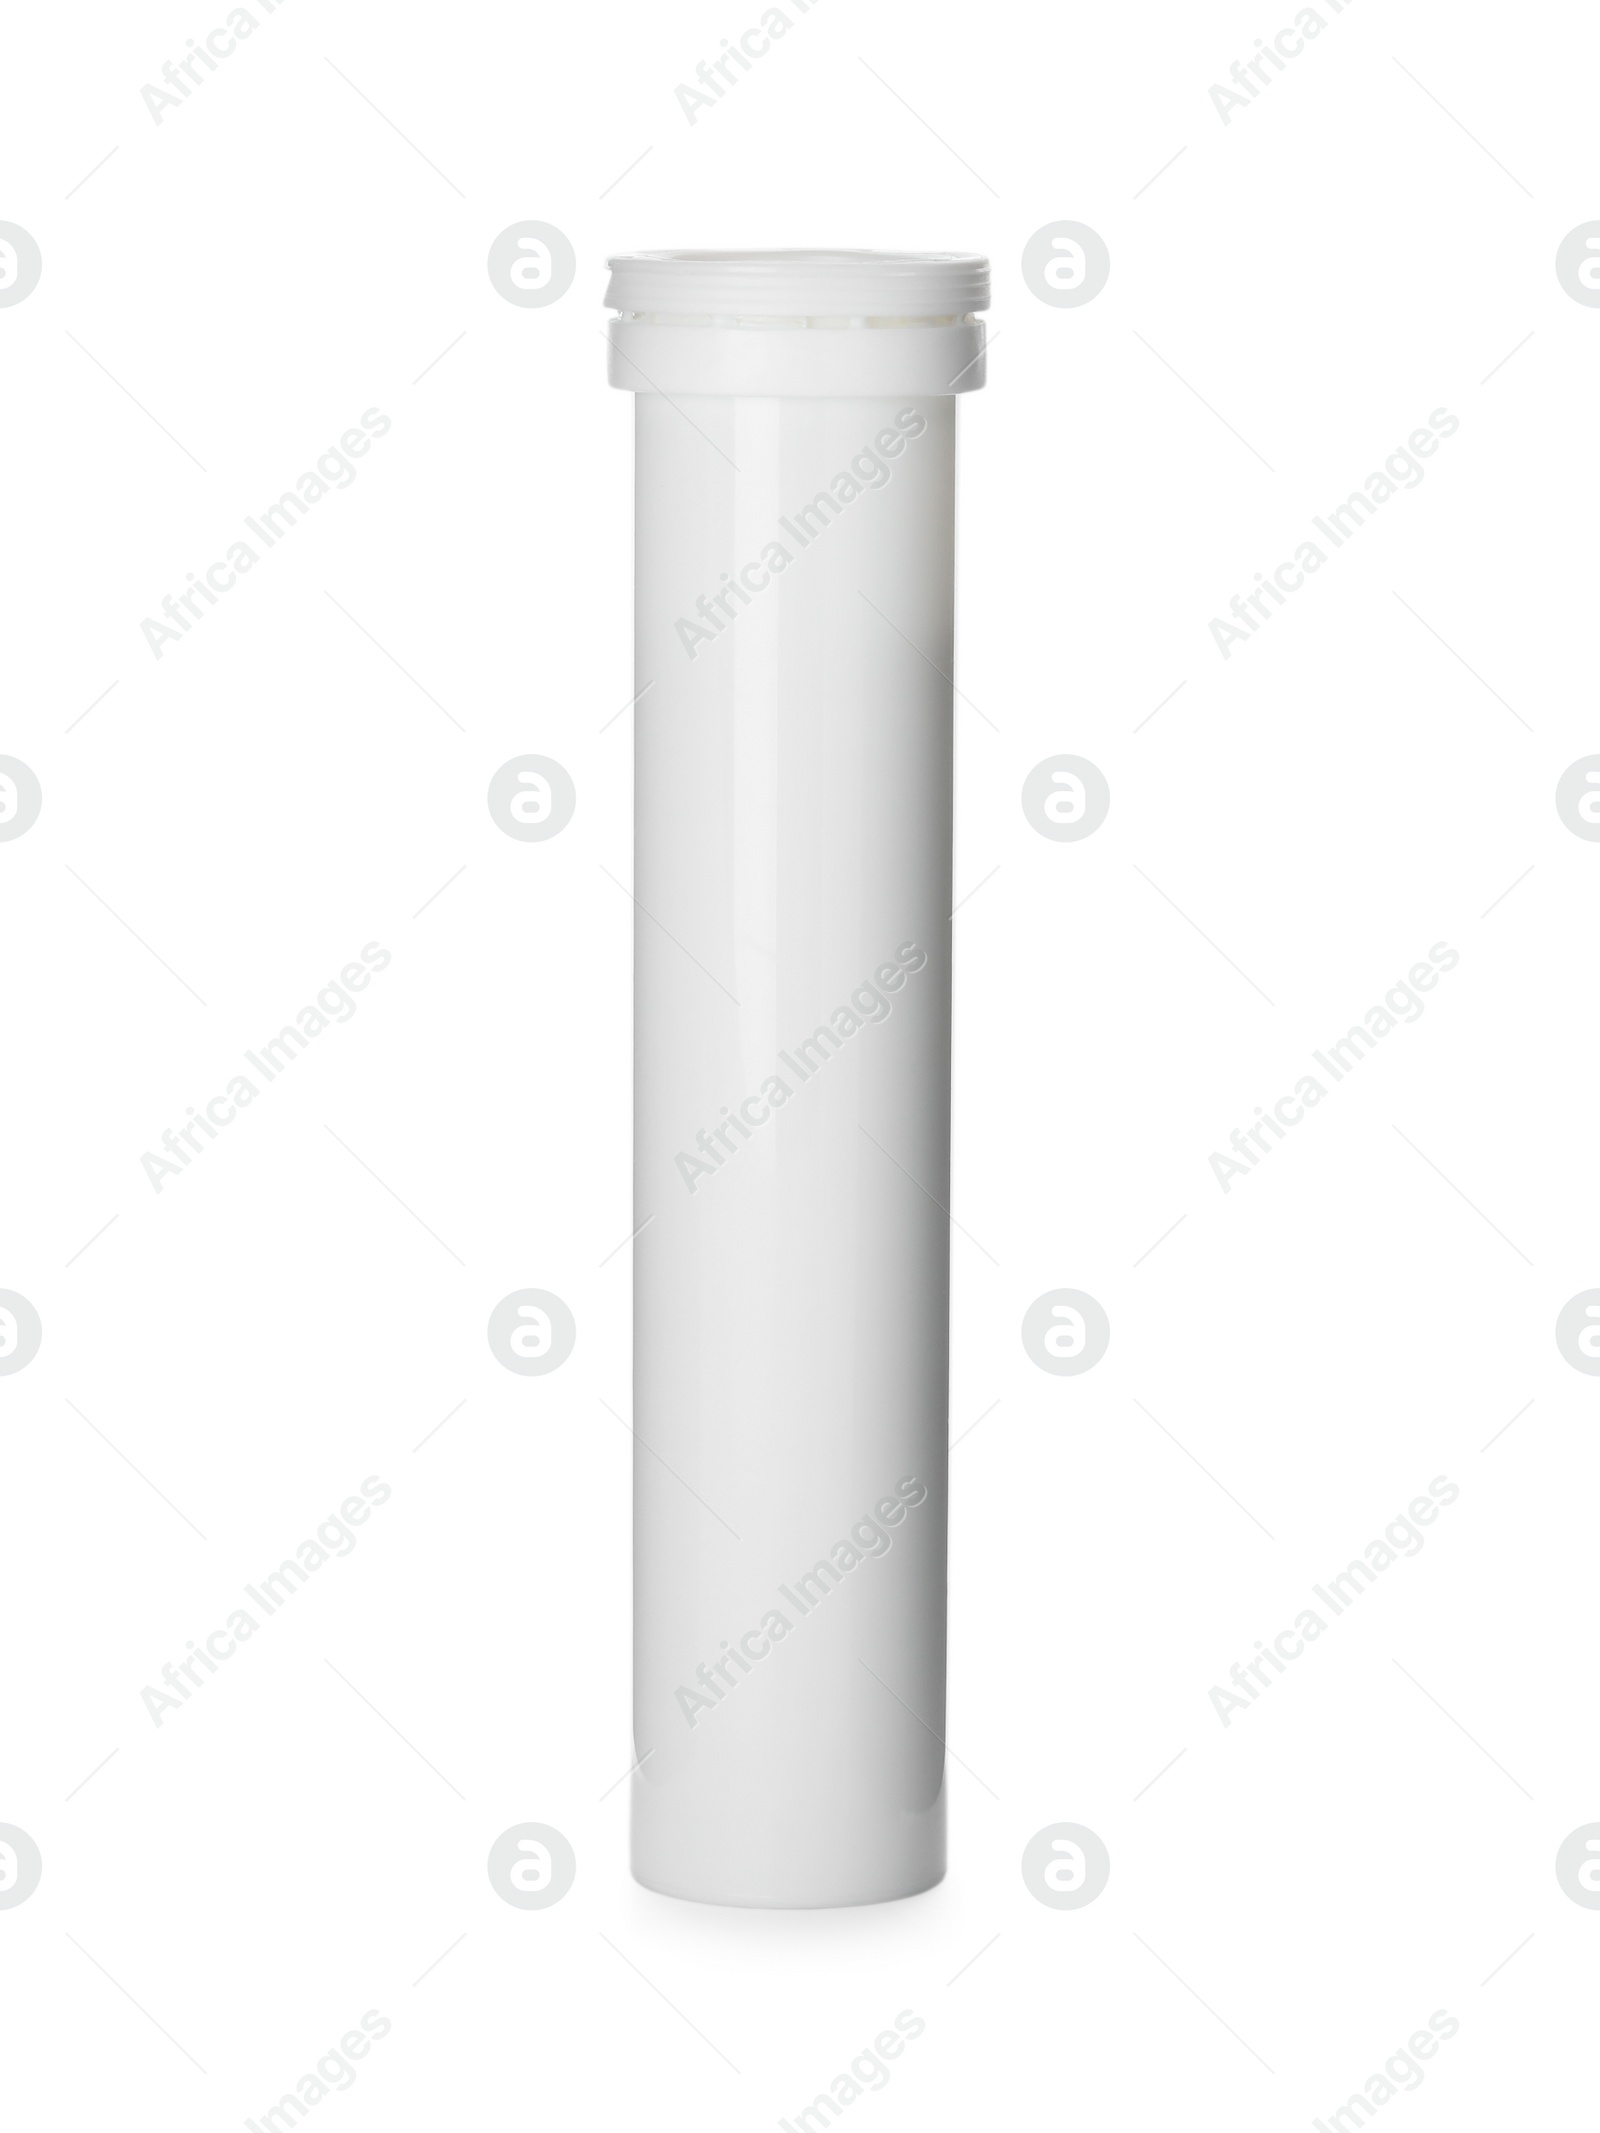 Photo of Plastic bottle for vitamin pills isolated on white